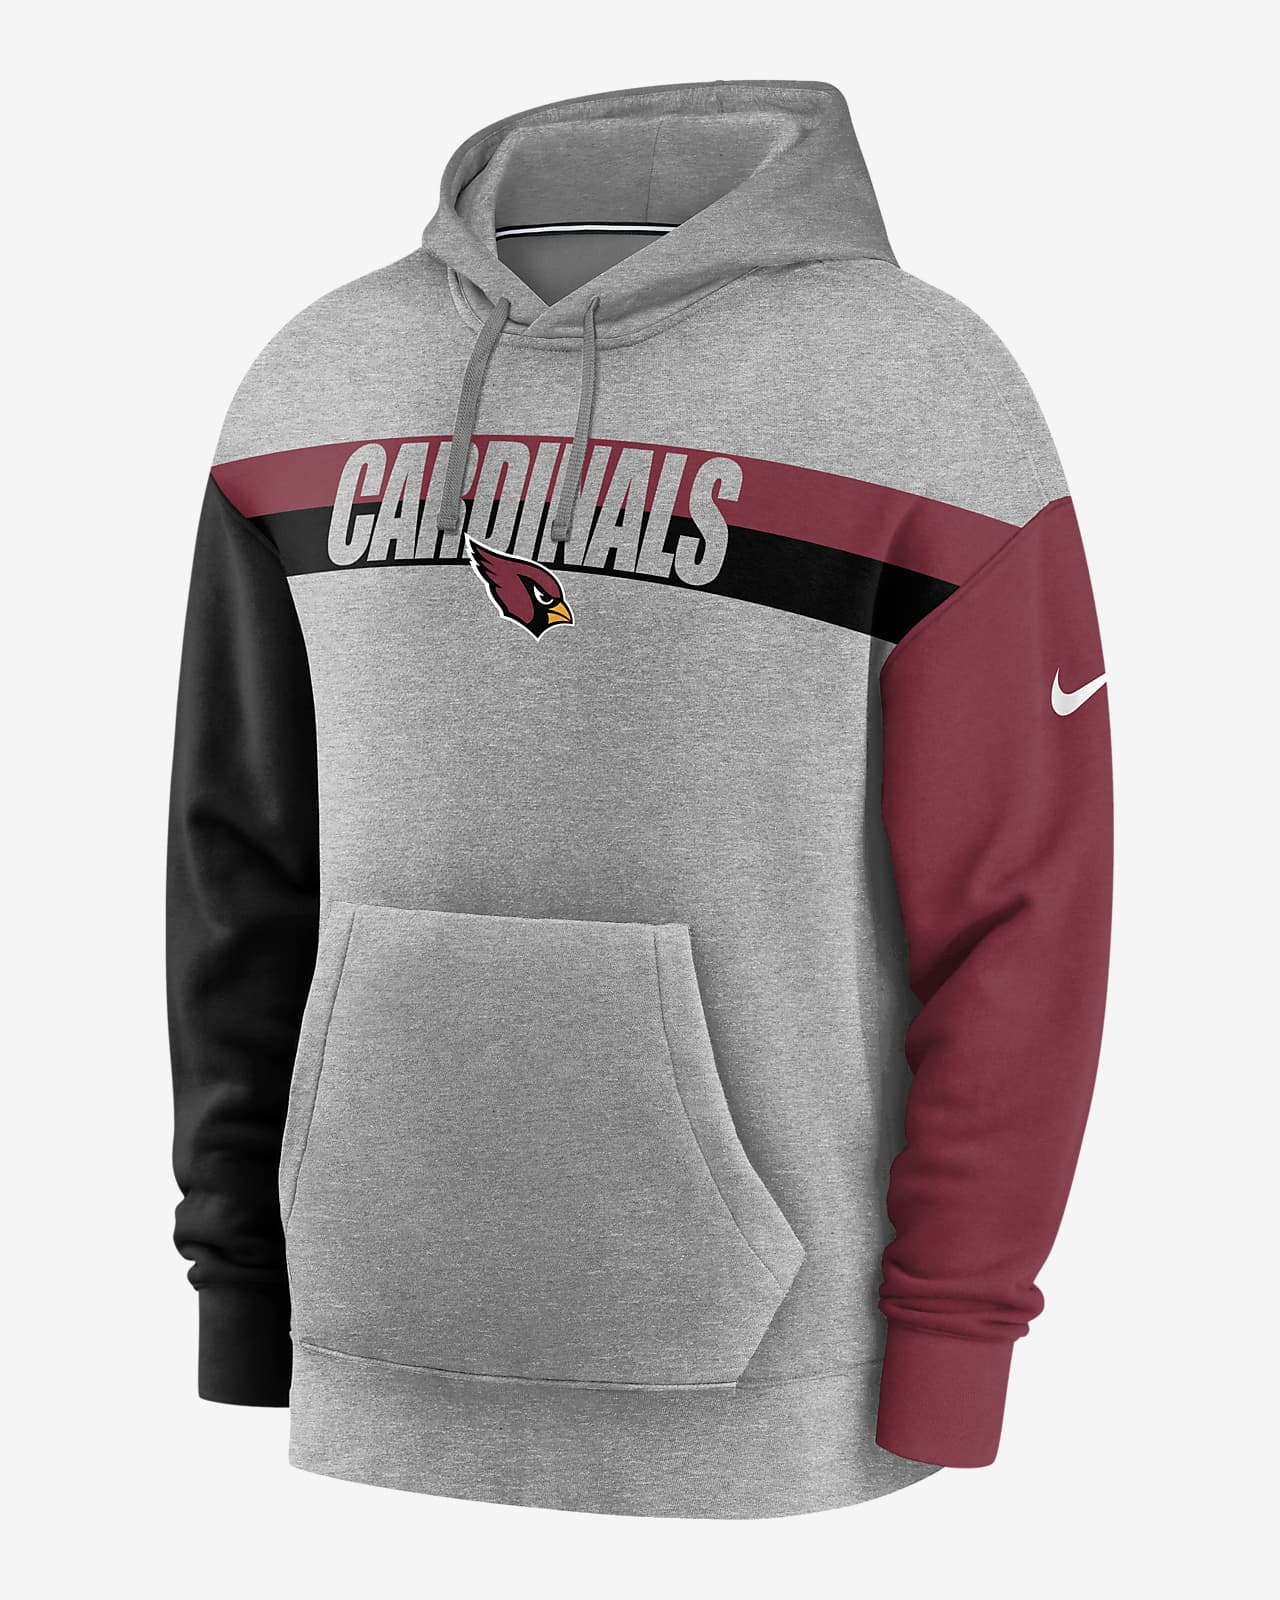 grey cardinals hoodie